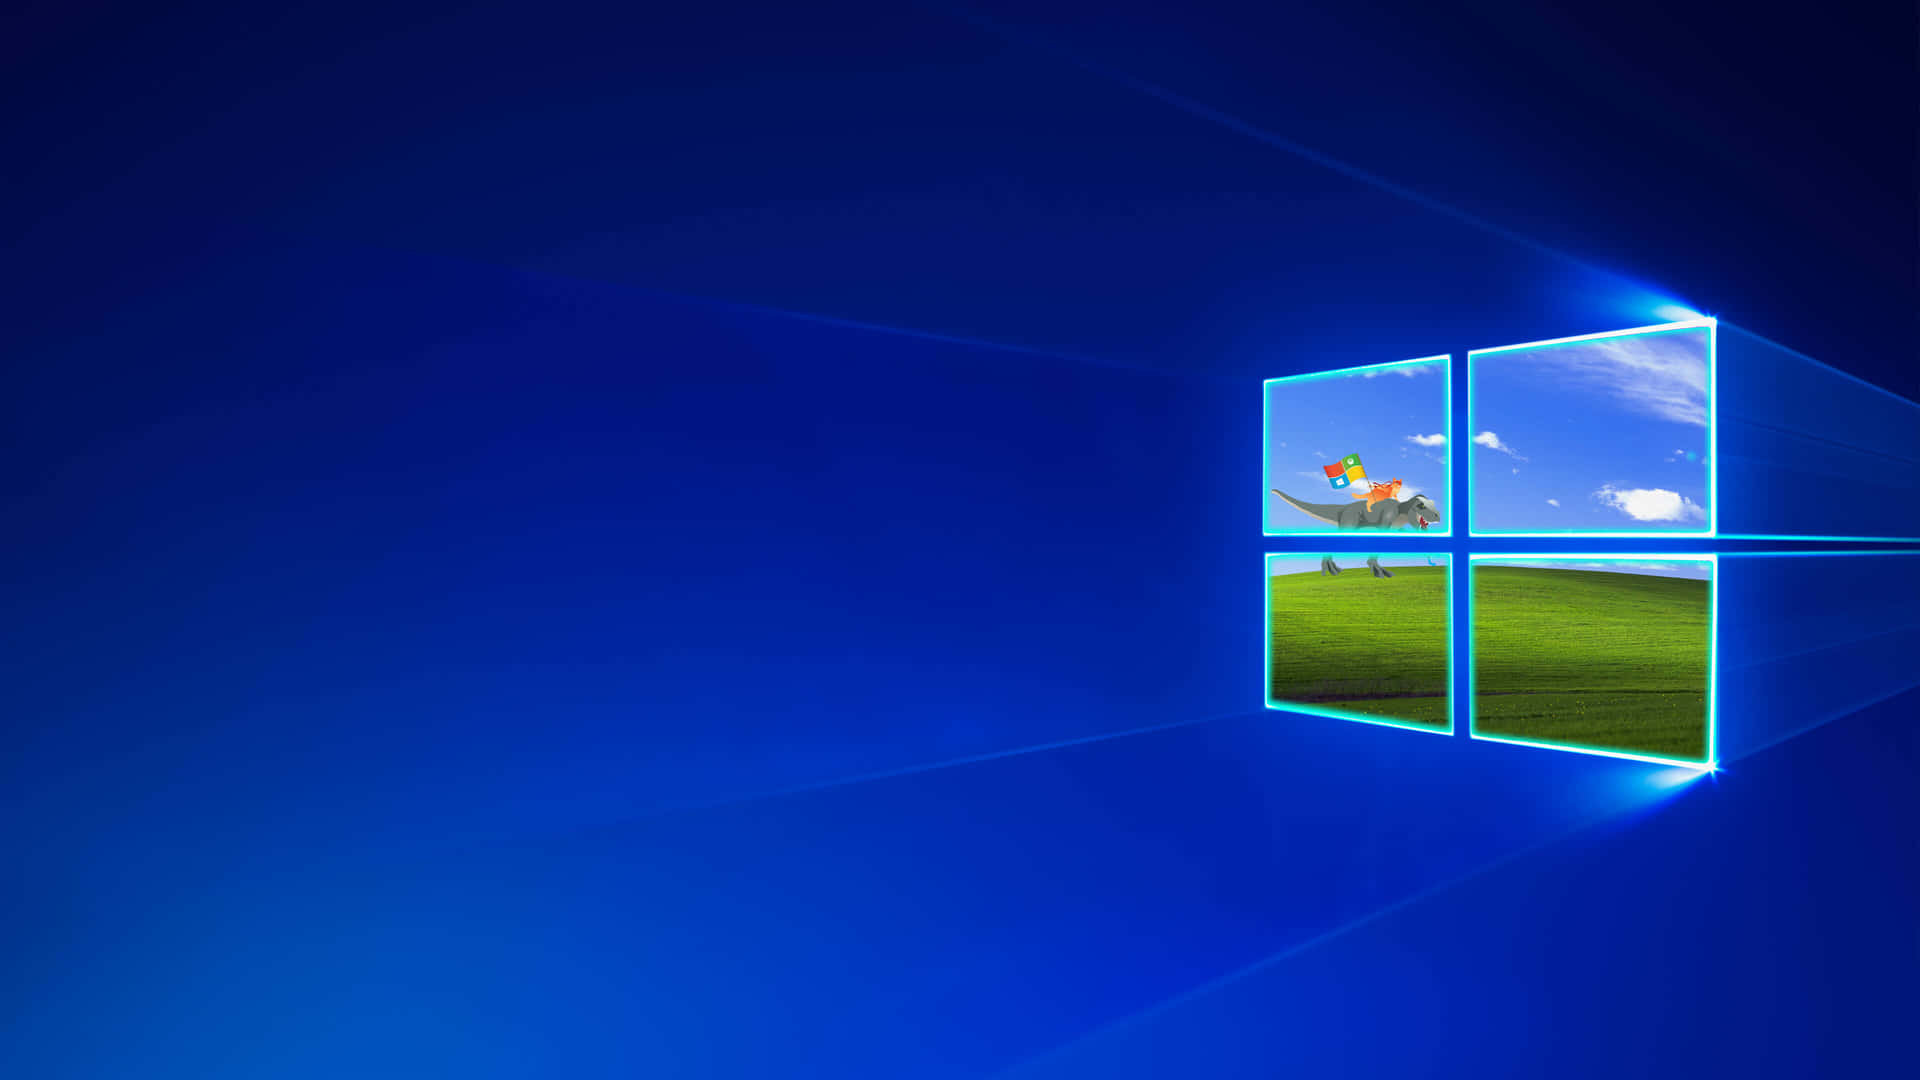 Windows 10 Hd Wallpaper Background